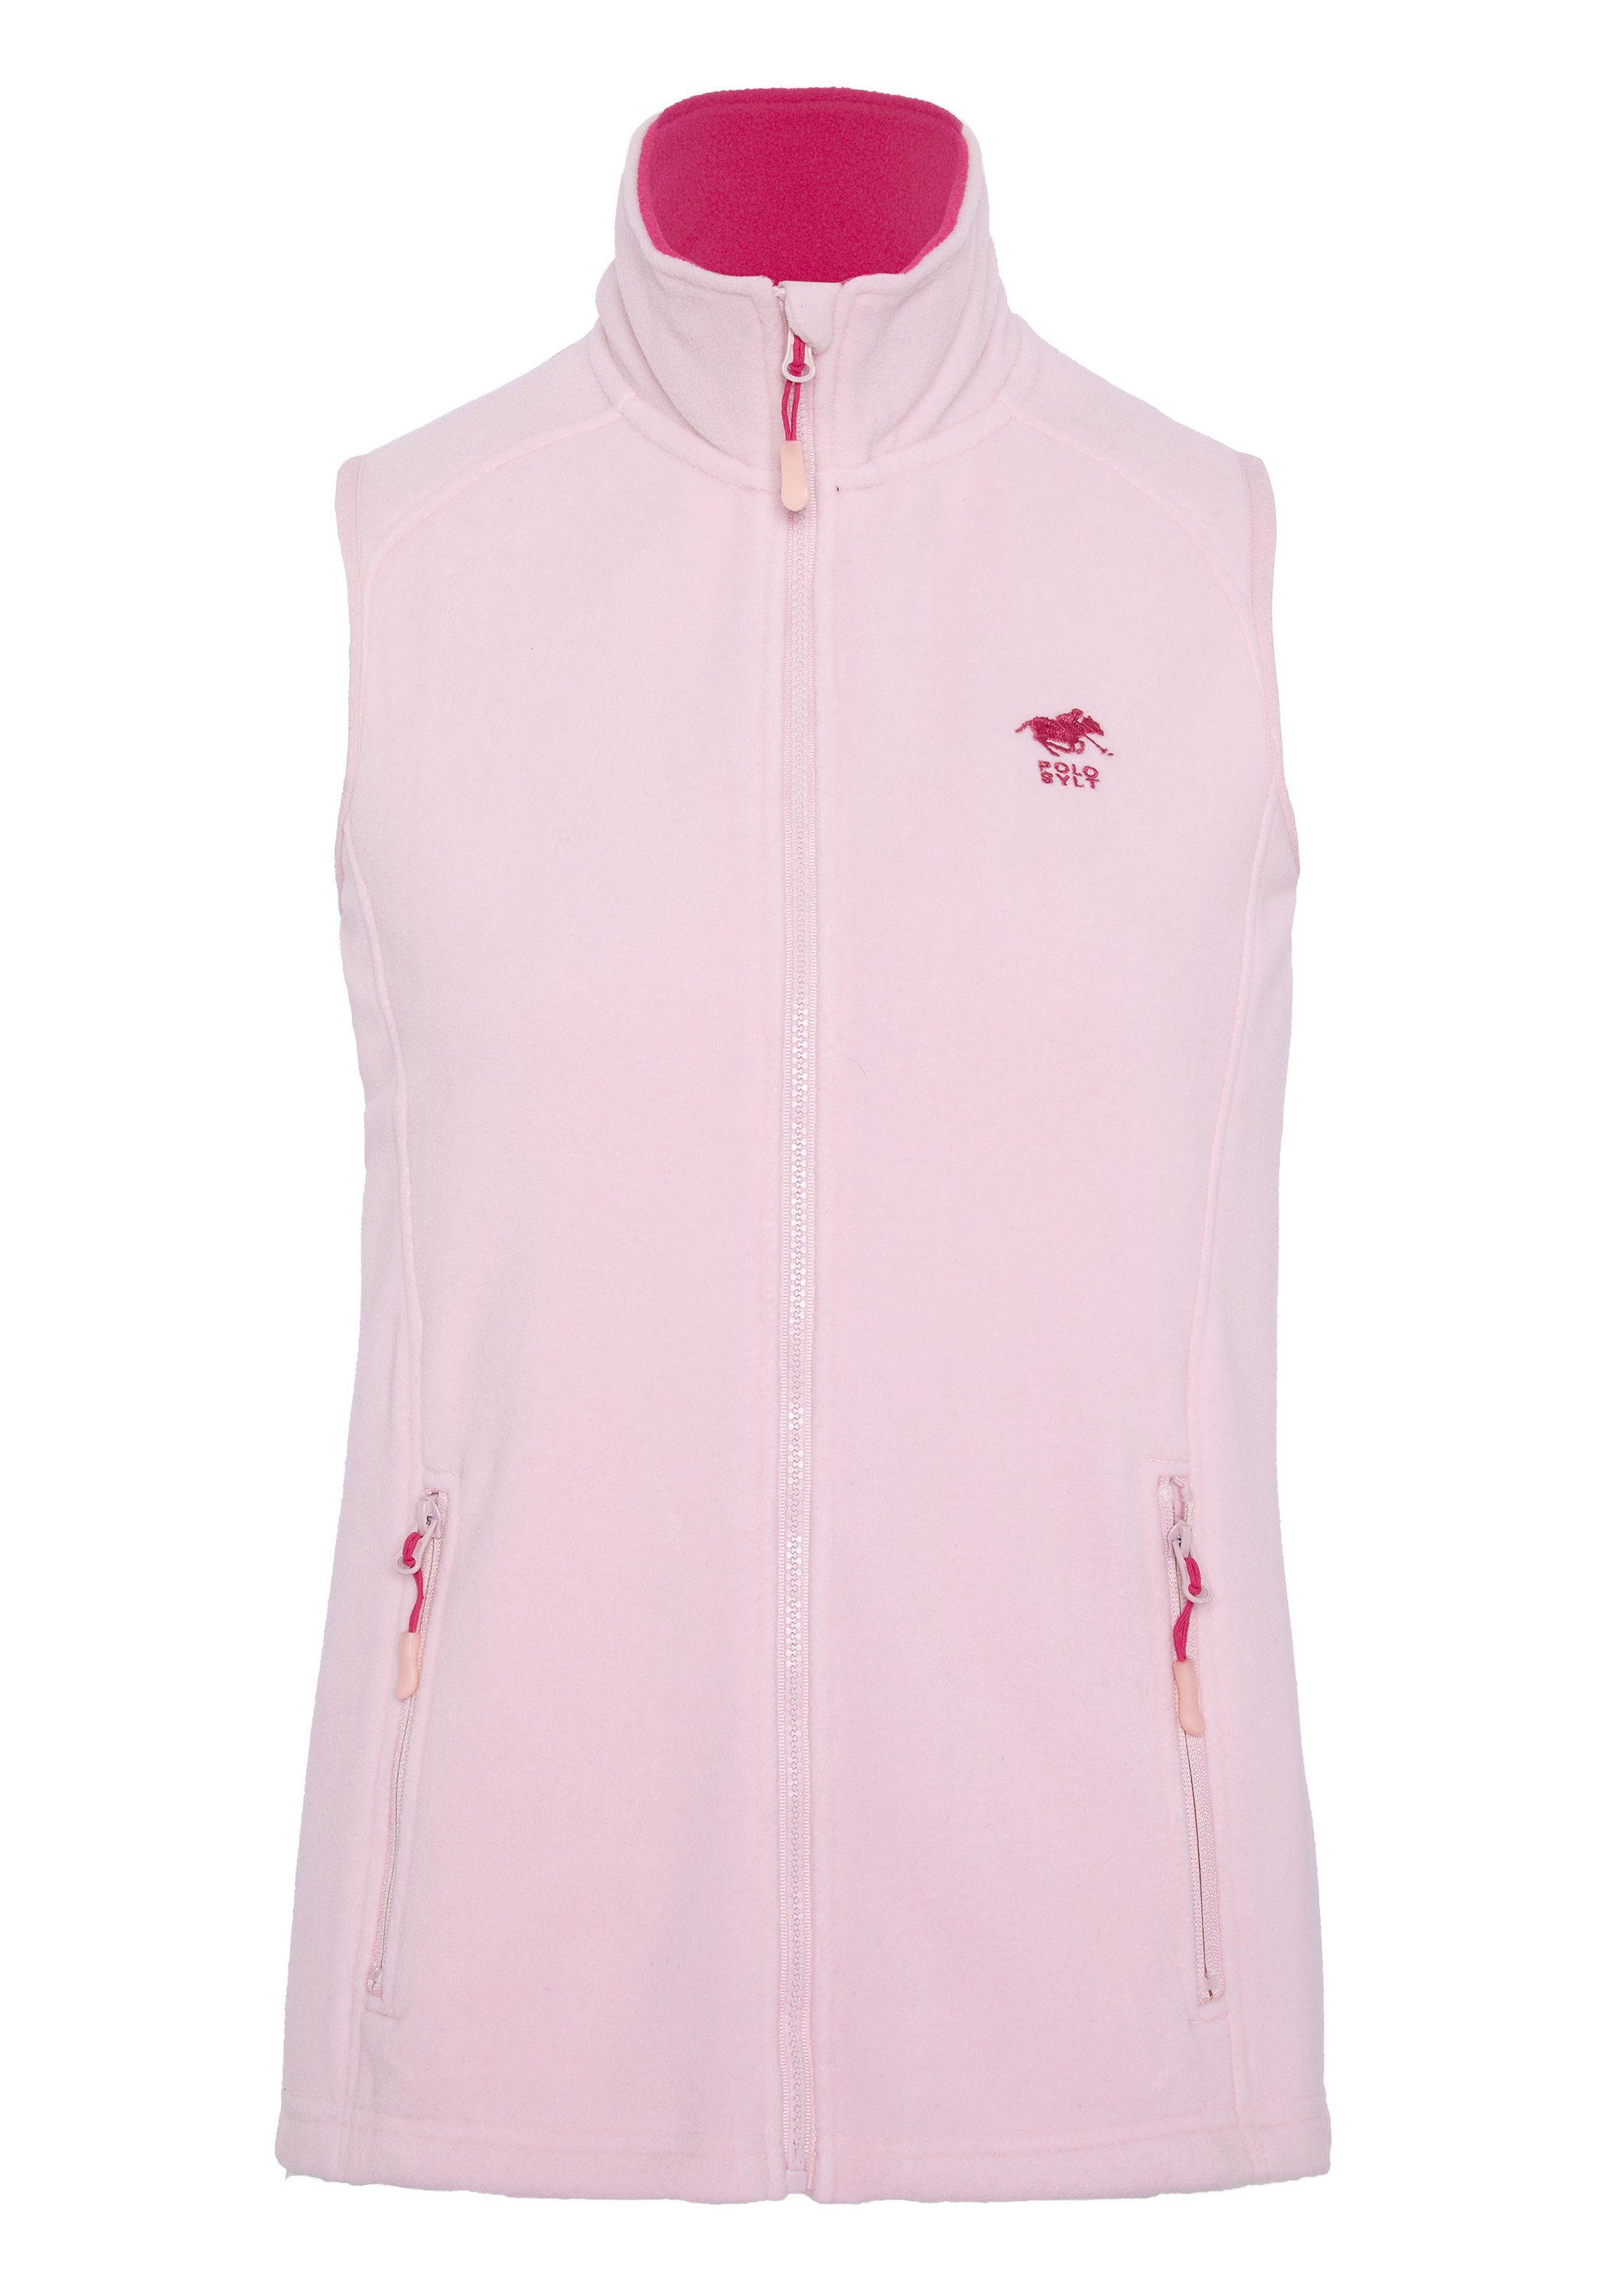 Polo Sylt Fleeceweste 13-2806 Lady Kinnschutz mit Frontreißverschluss Pink